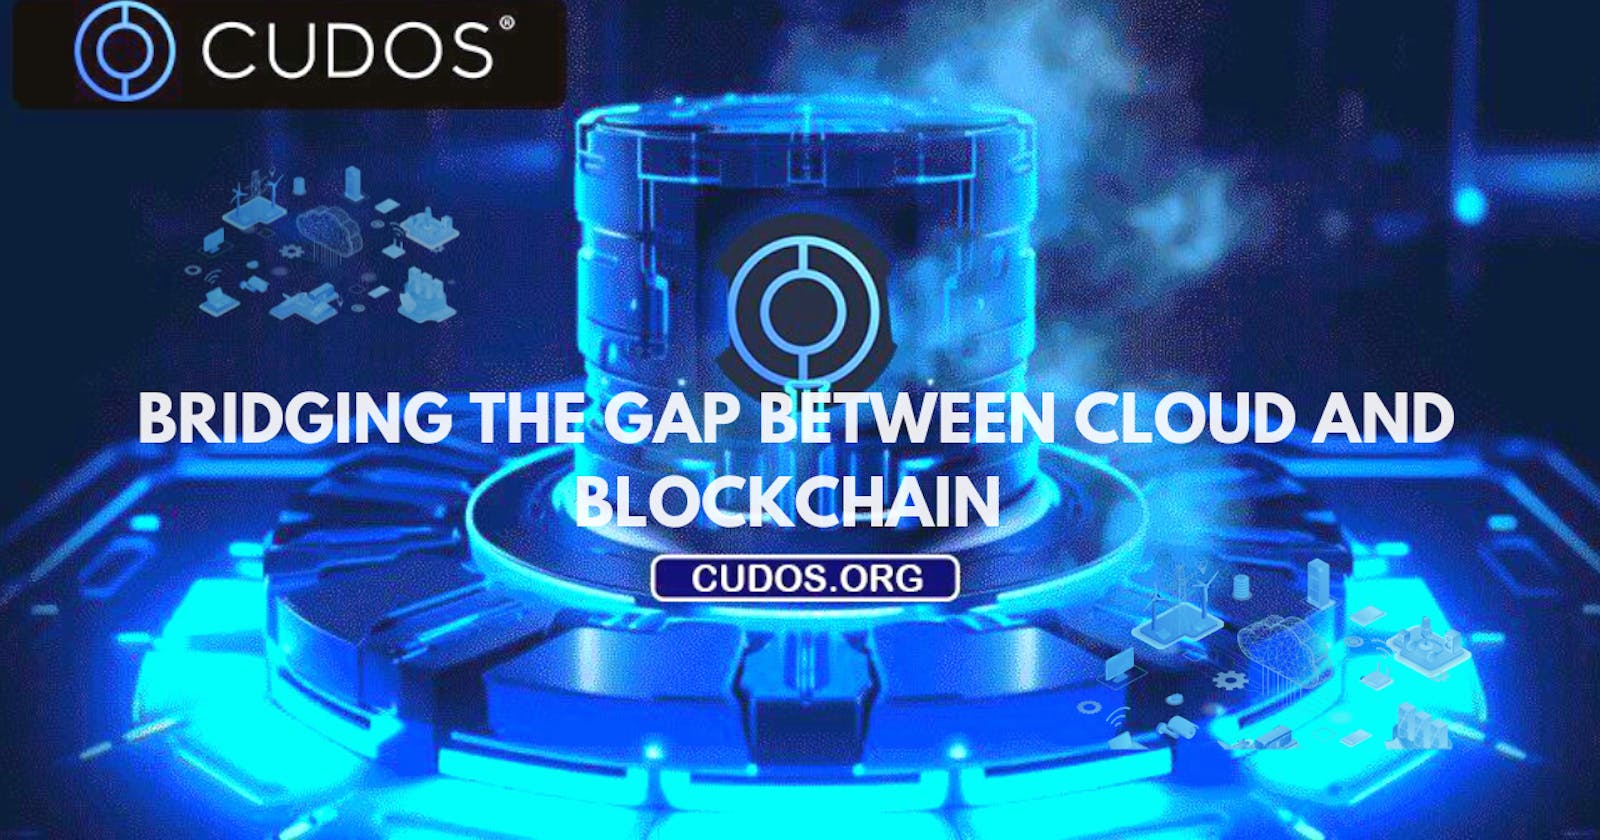 CUDOS Bridges the gap between Cloud and Blockchain